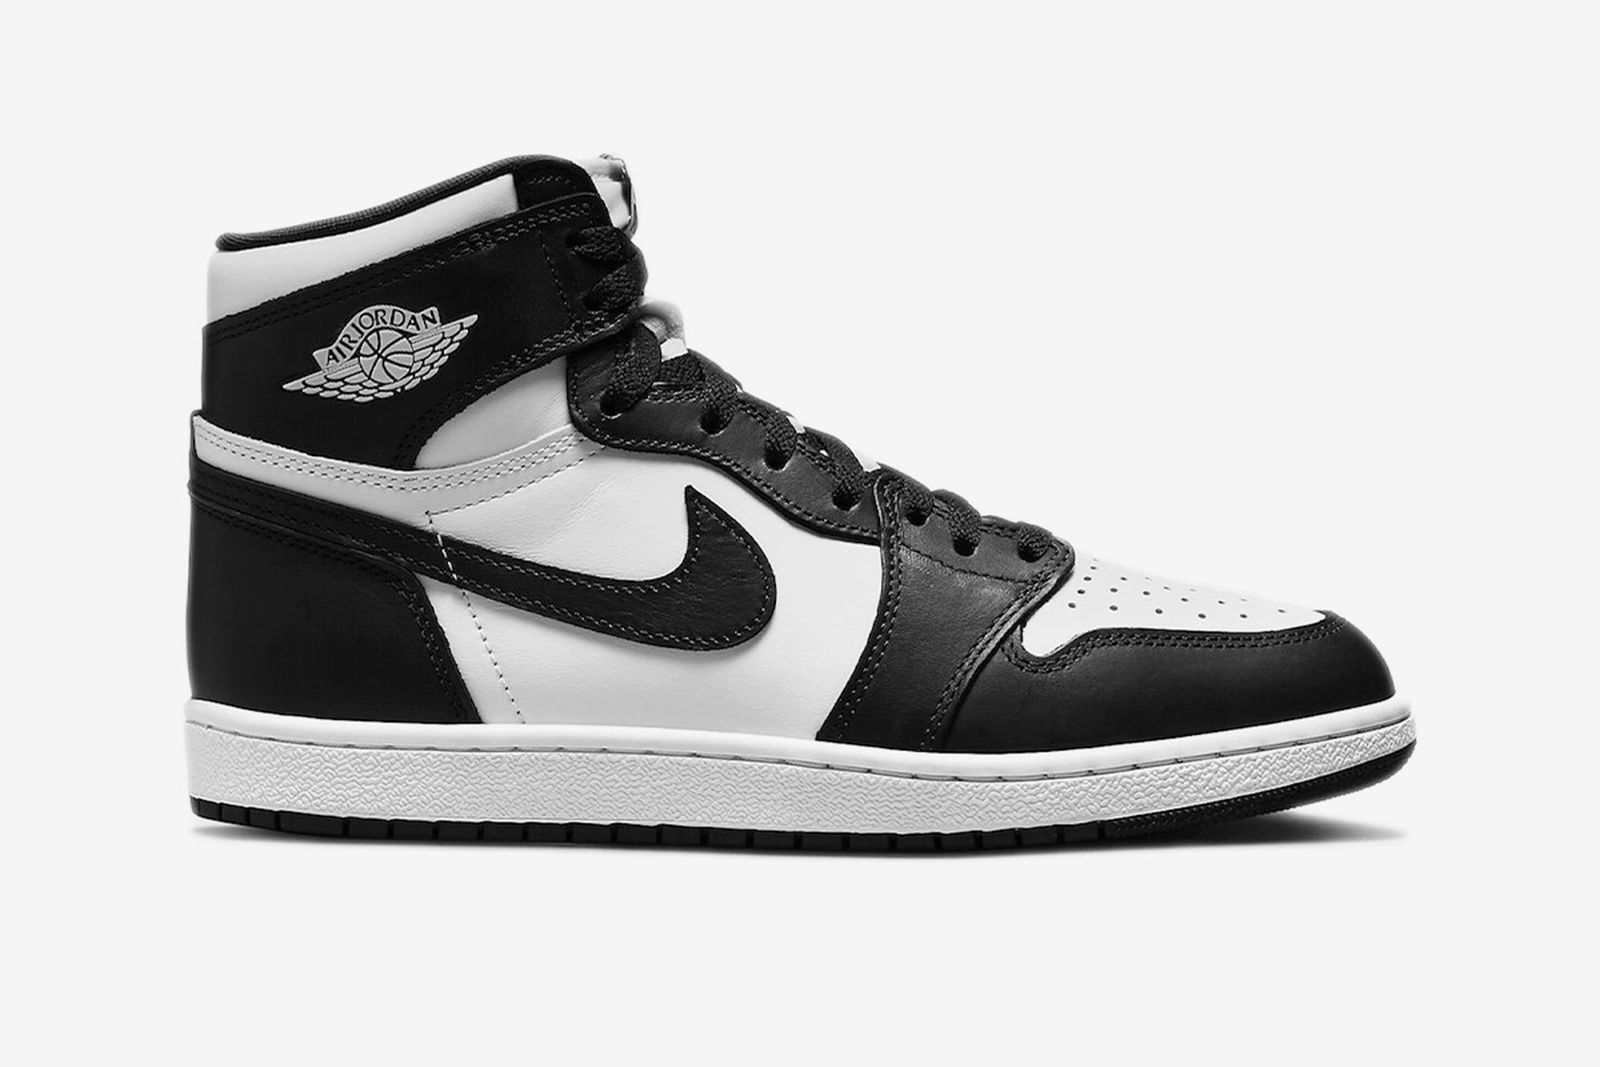 Nike Jordan 1 High 85 Black White: Where to Buy & Resale Prices